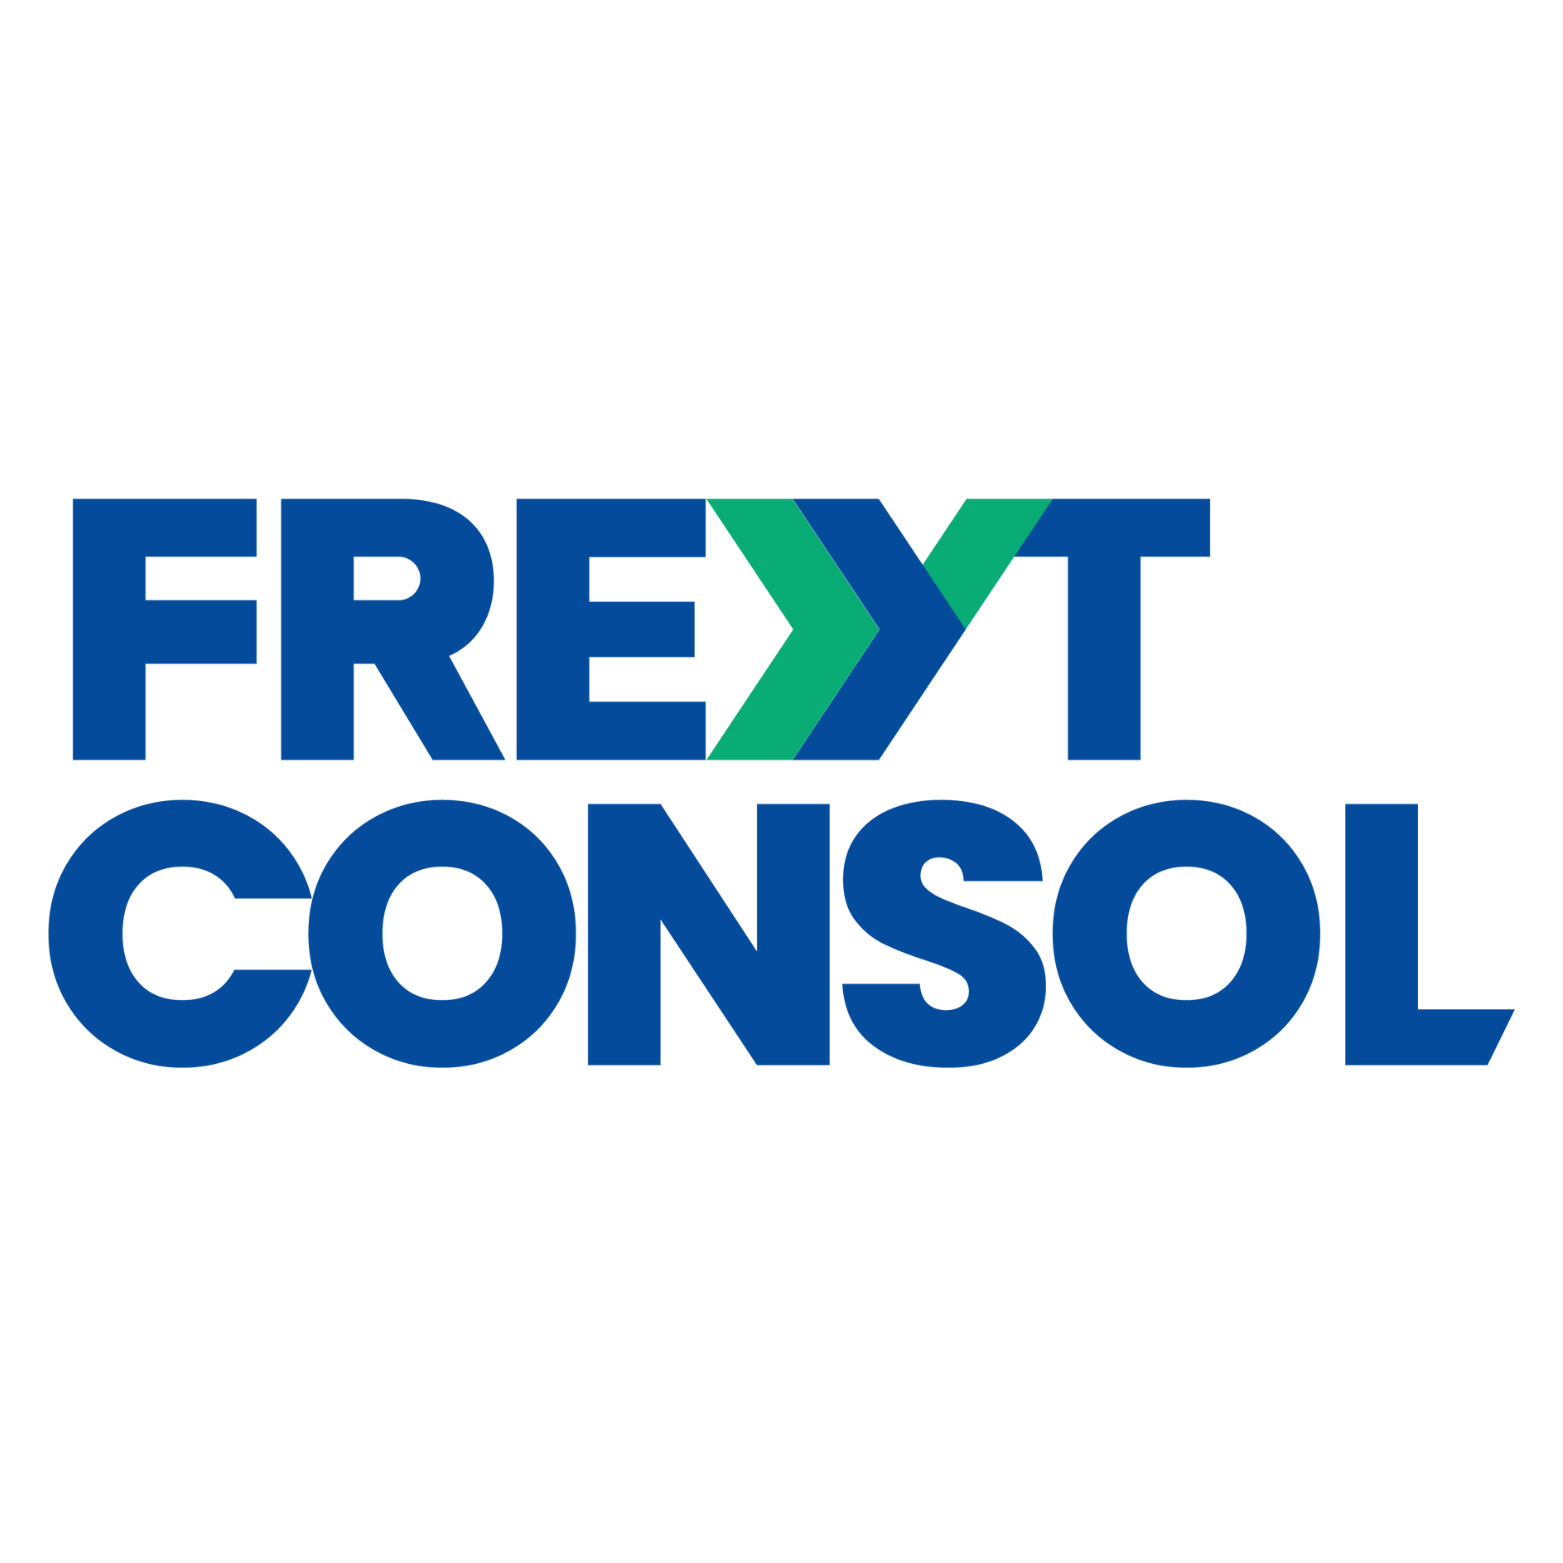 Freyt Consol Pte Ltd